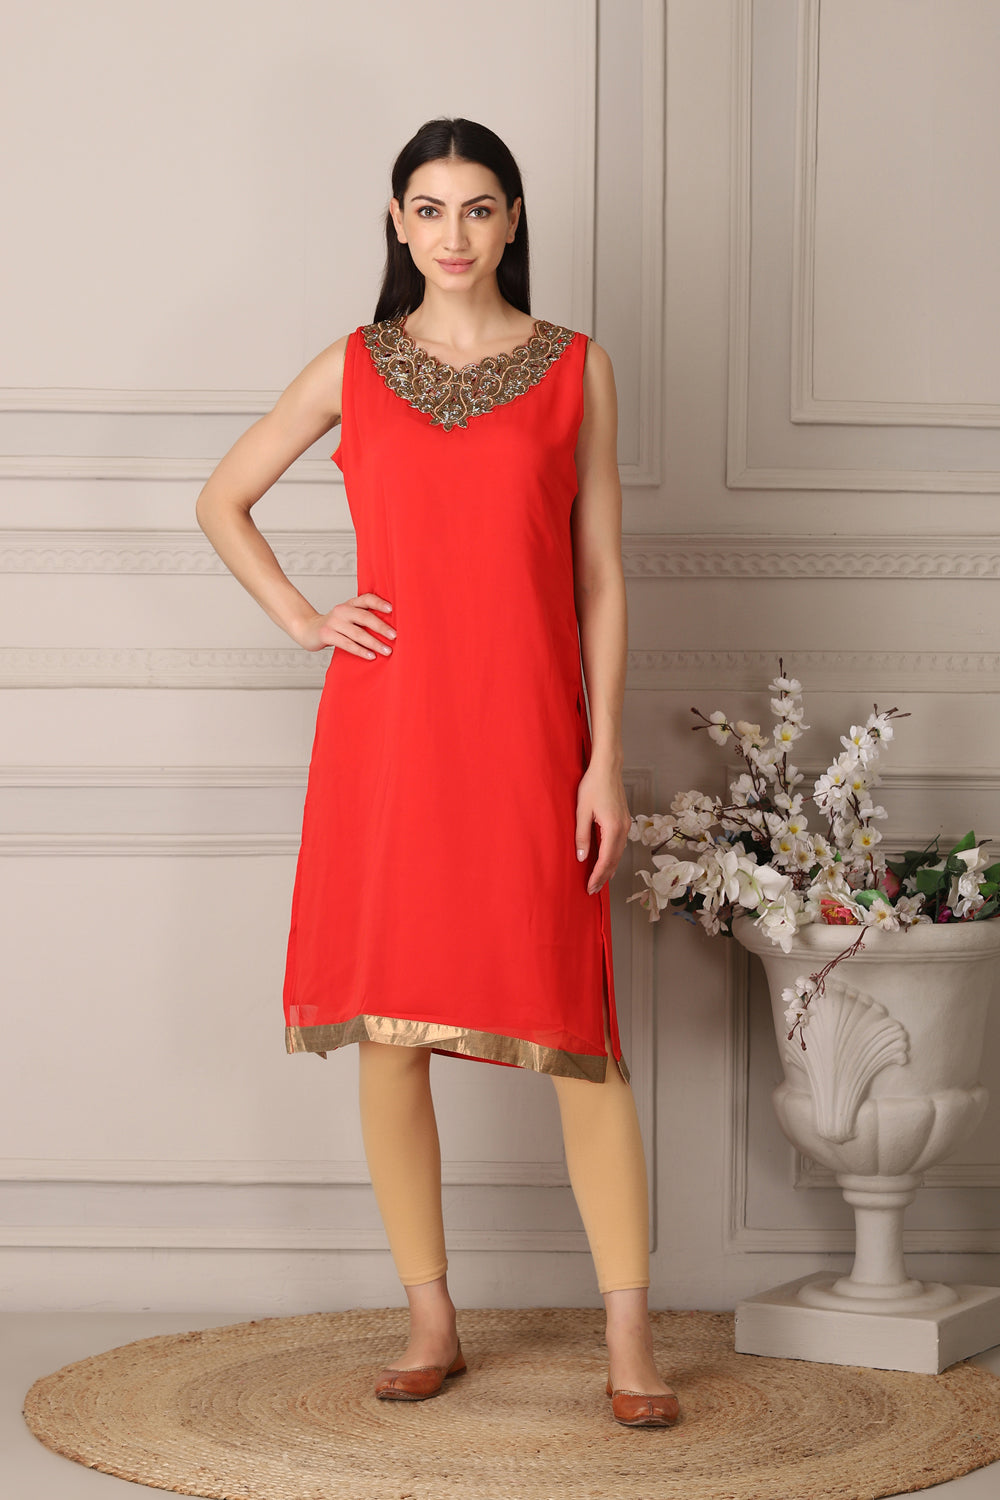 Red Kurtis Designs  Latest Red Color Kurta for Women  Her Kurti Shop